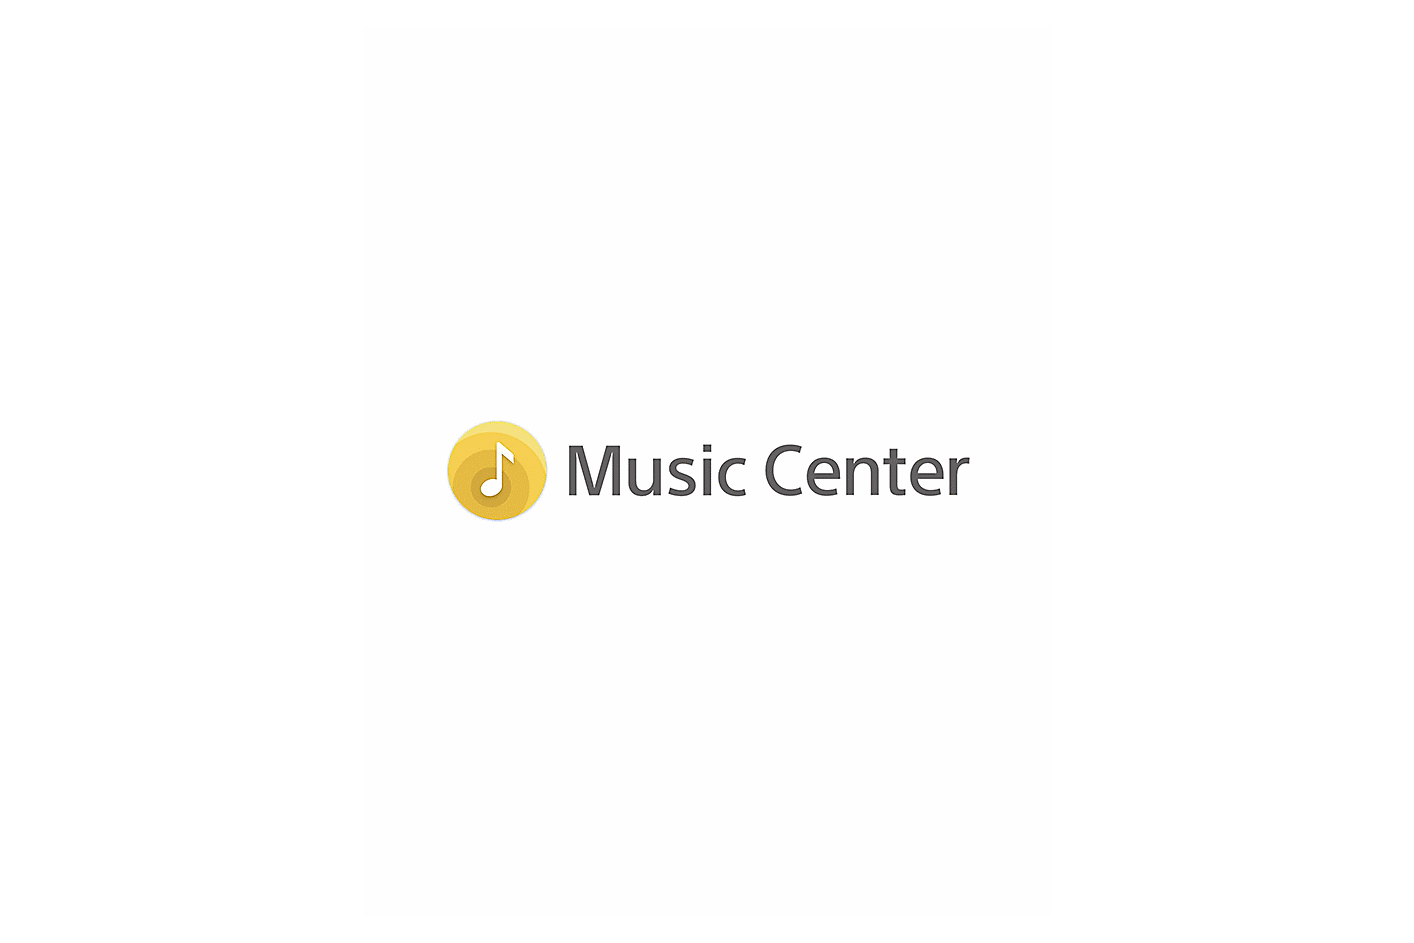 Sony 的 Music Center 標誌